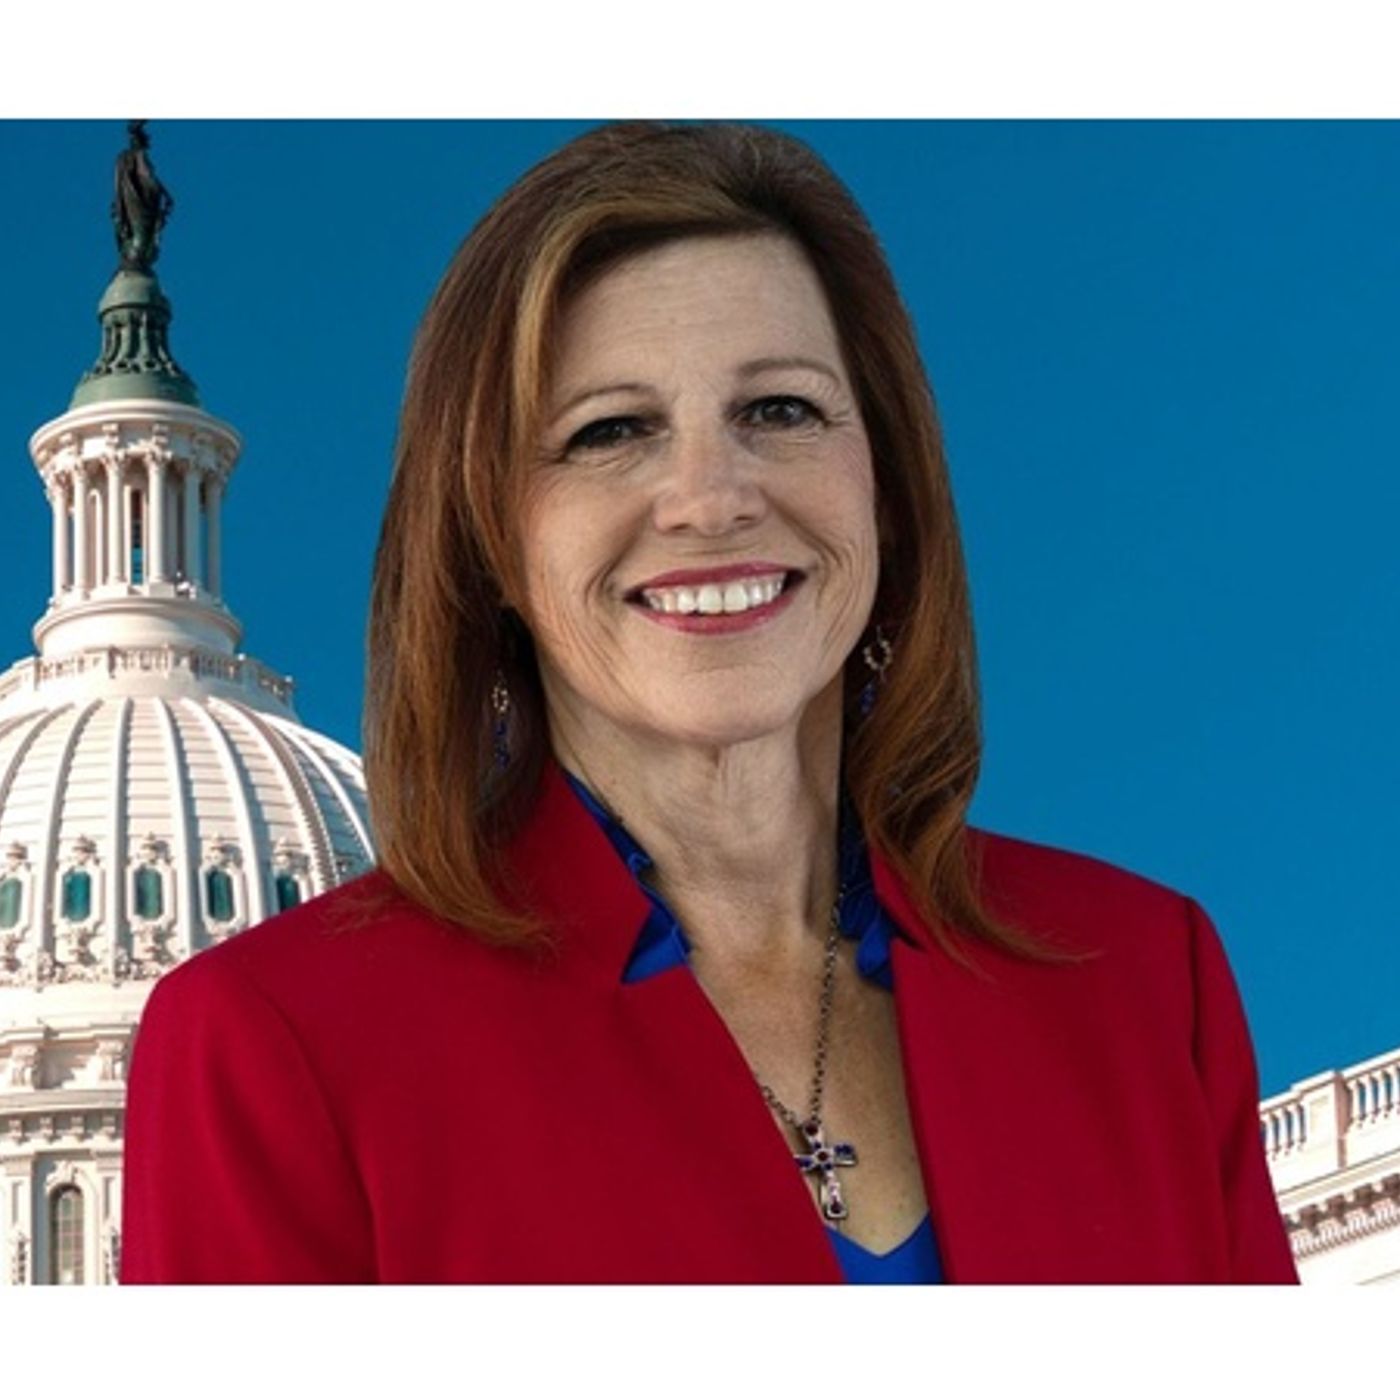 Meet 2022 GOP Nominee for US Senate of Oregon Candidate Jo Rae Perkin (R)